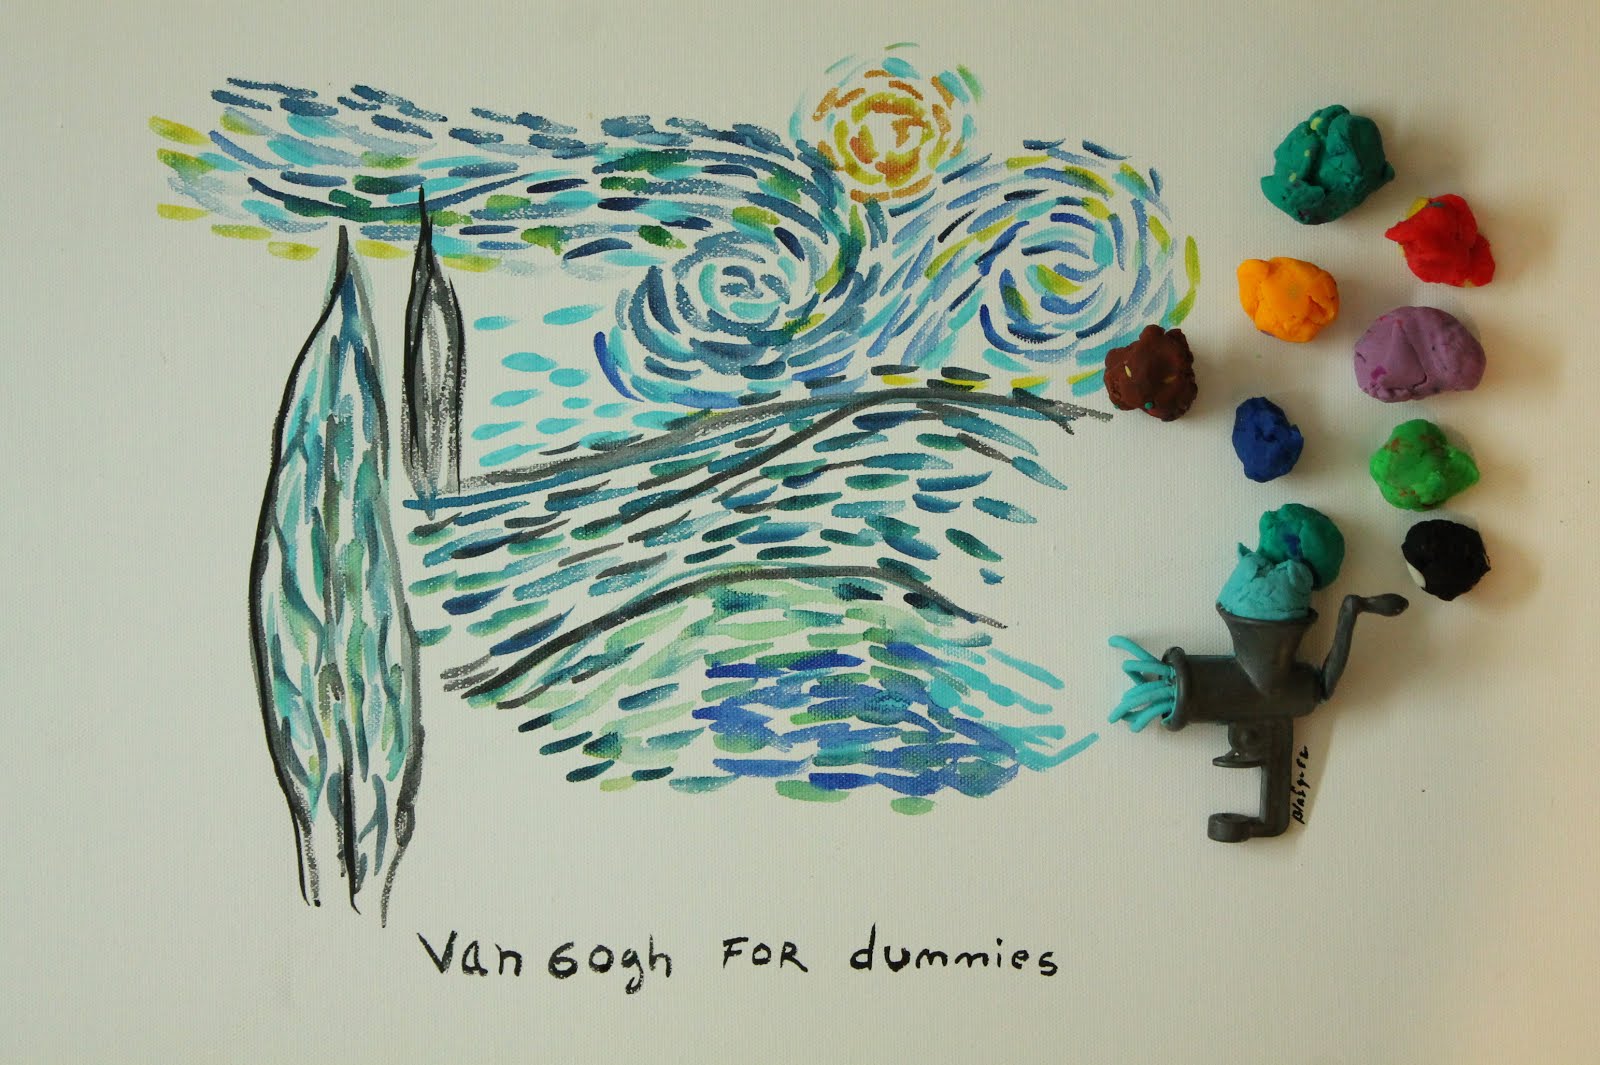 Van Gogh for dummies #2